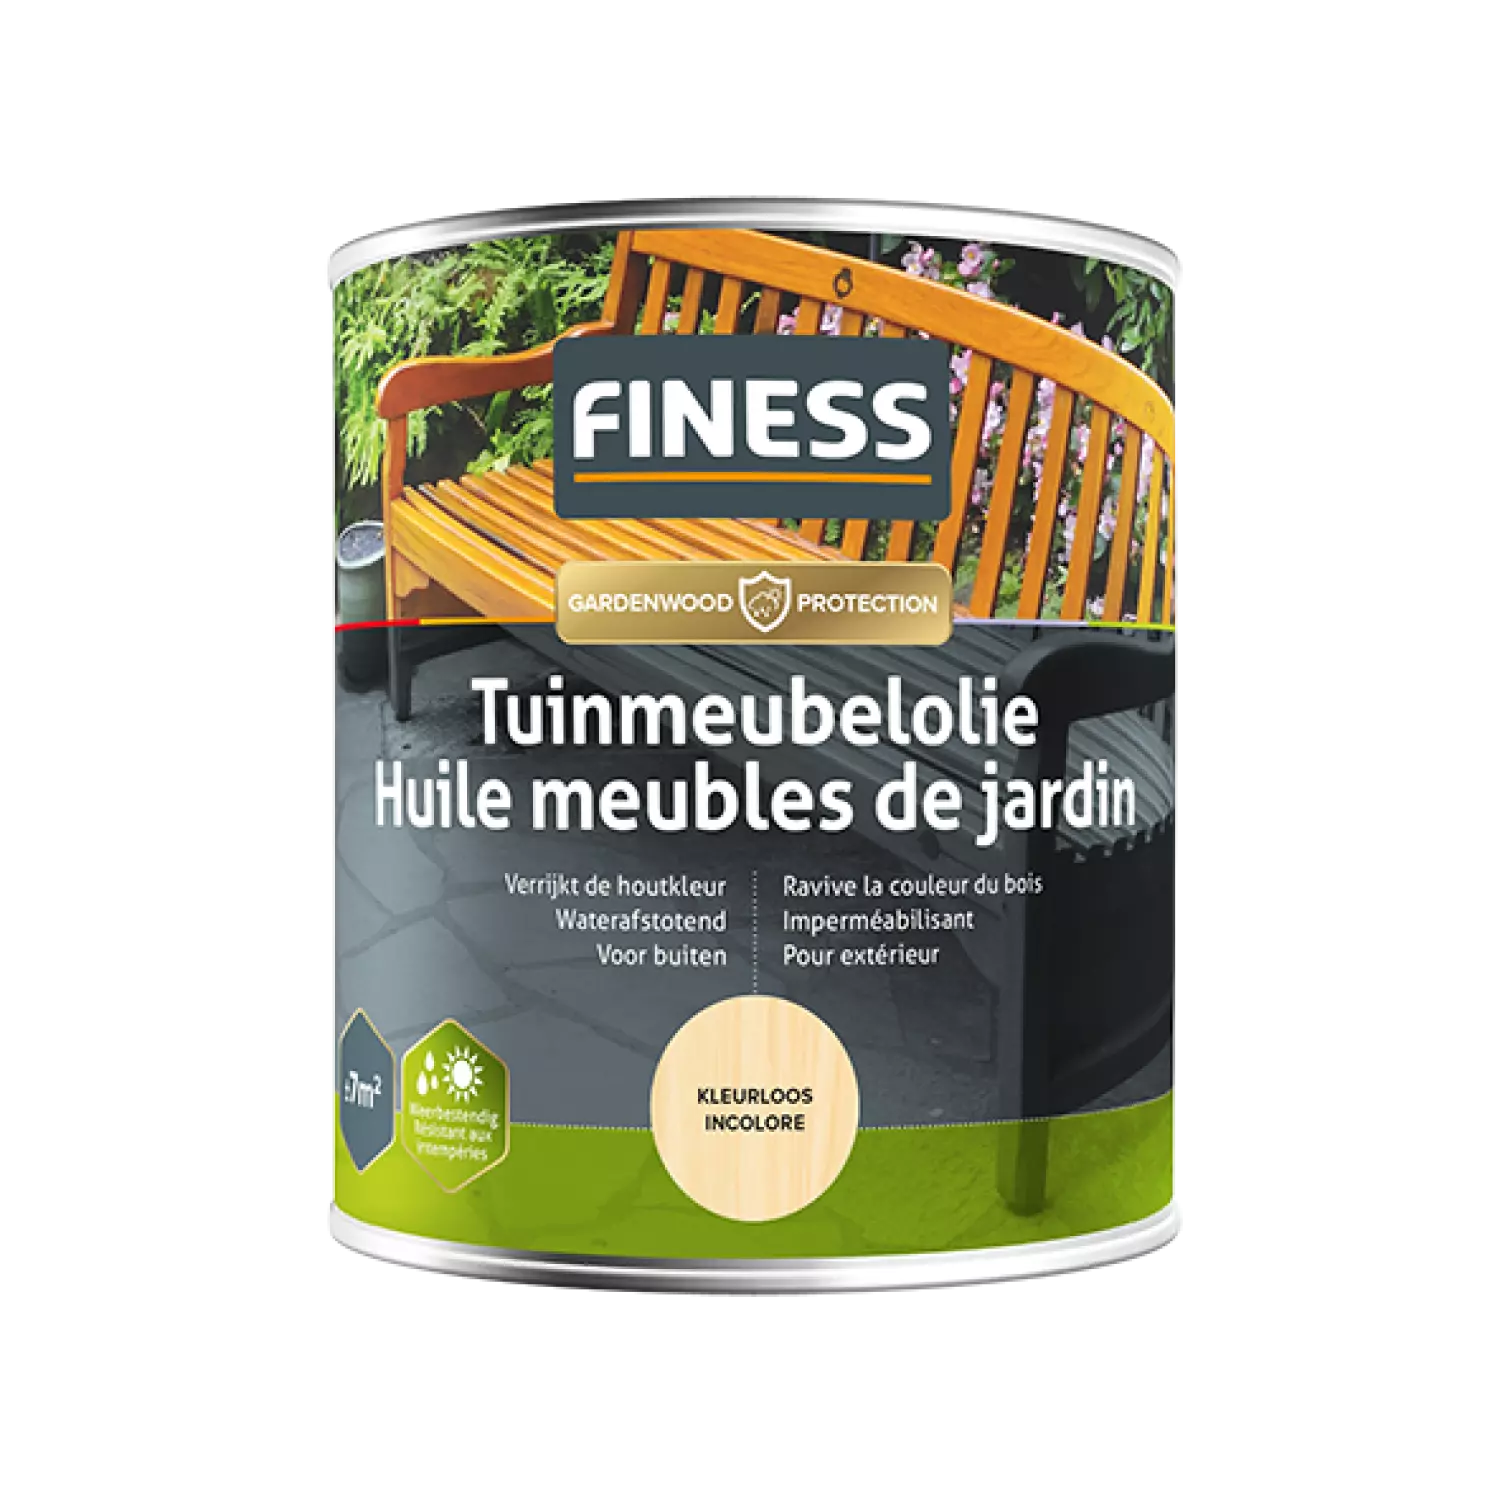 Finess Tuinmeubelolie - Kleurloos - 2,5L-image